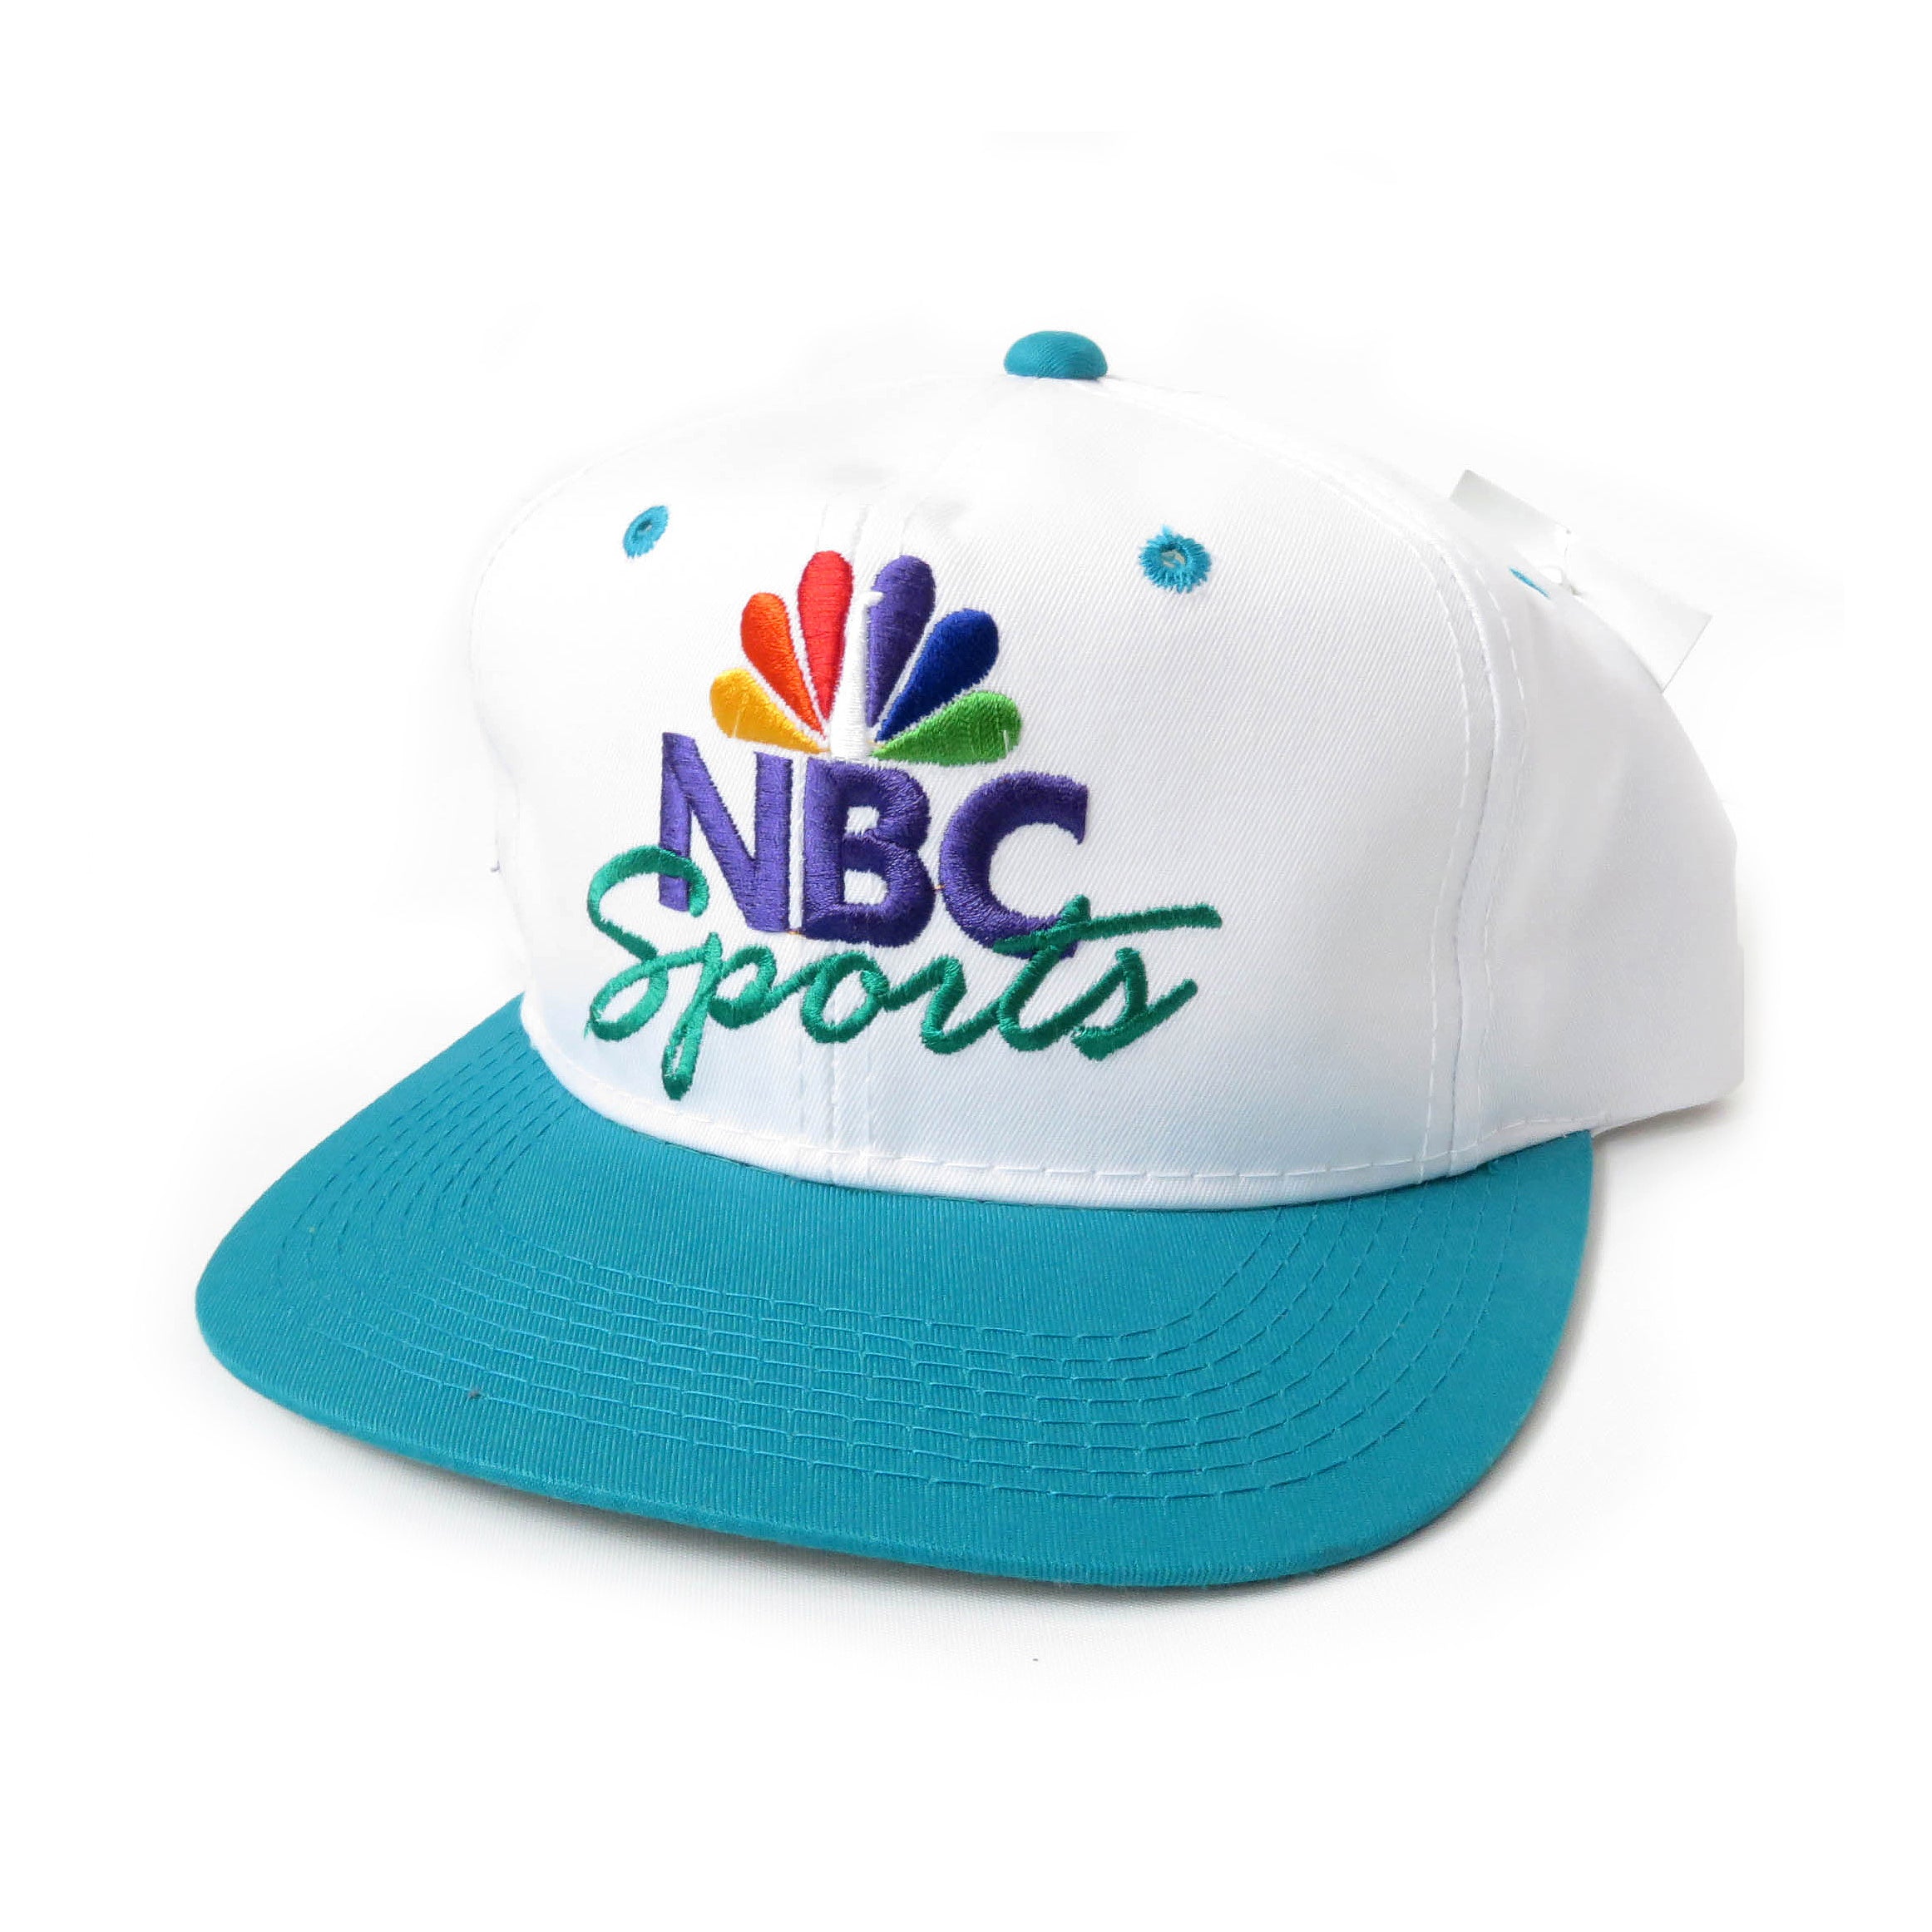 Vintage 1993 NBC Sports Super Bowl Snapback Hat